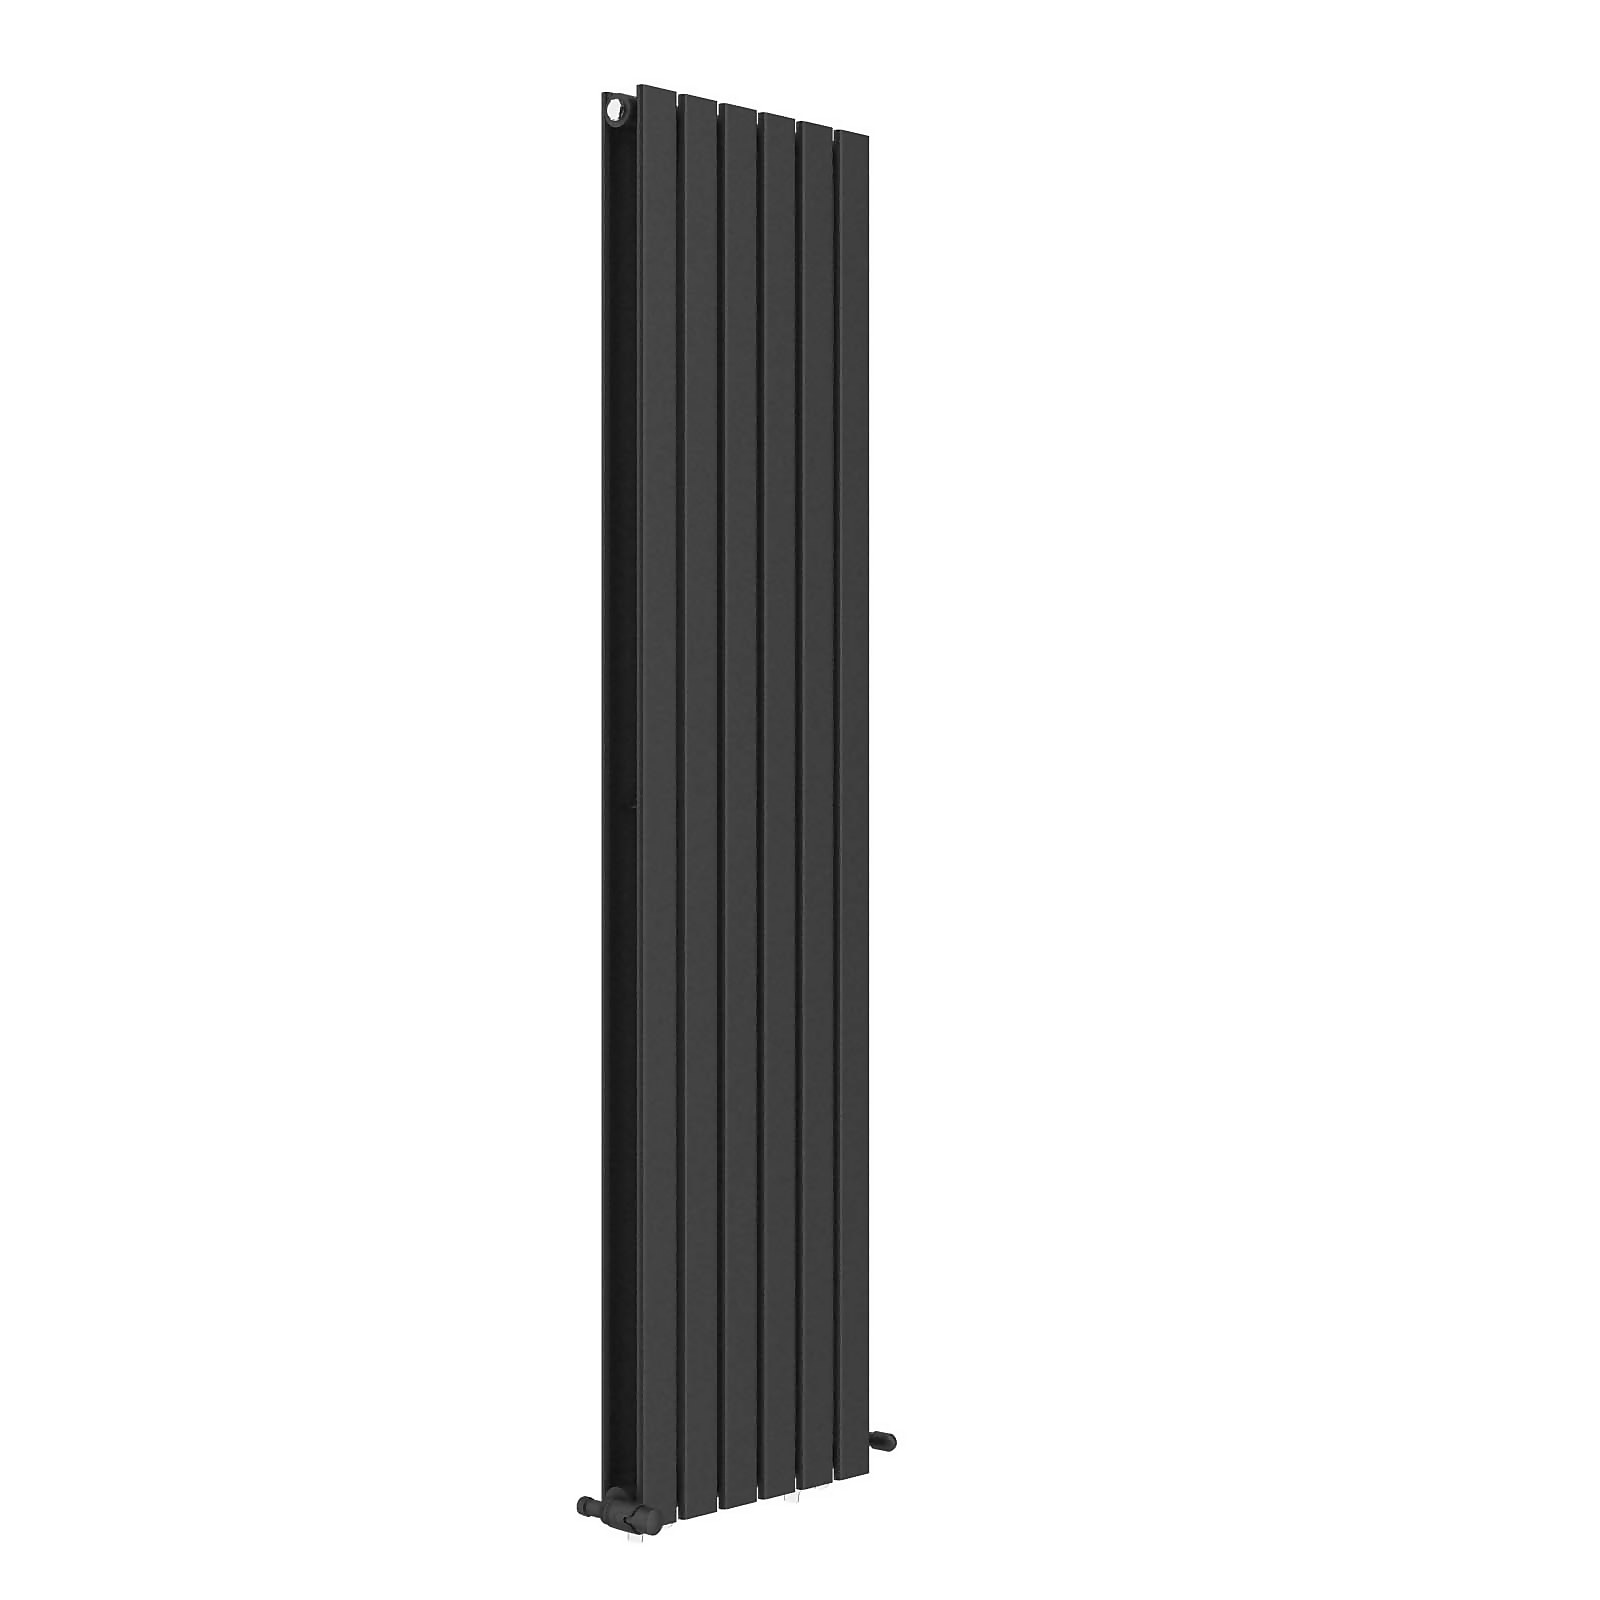 Photo of Vurtu1 Vertical Double Panel Radiator 1600mm X 410mm - Black